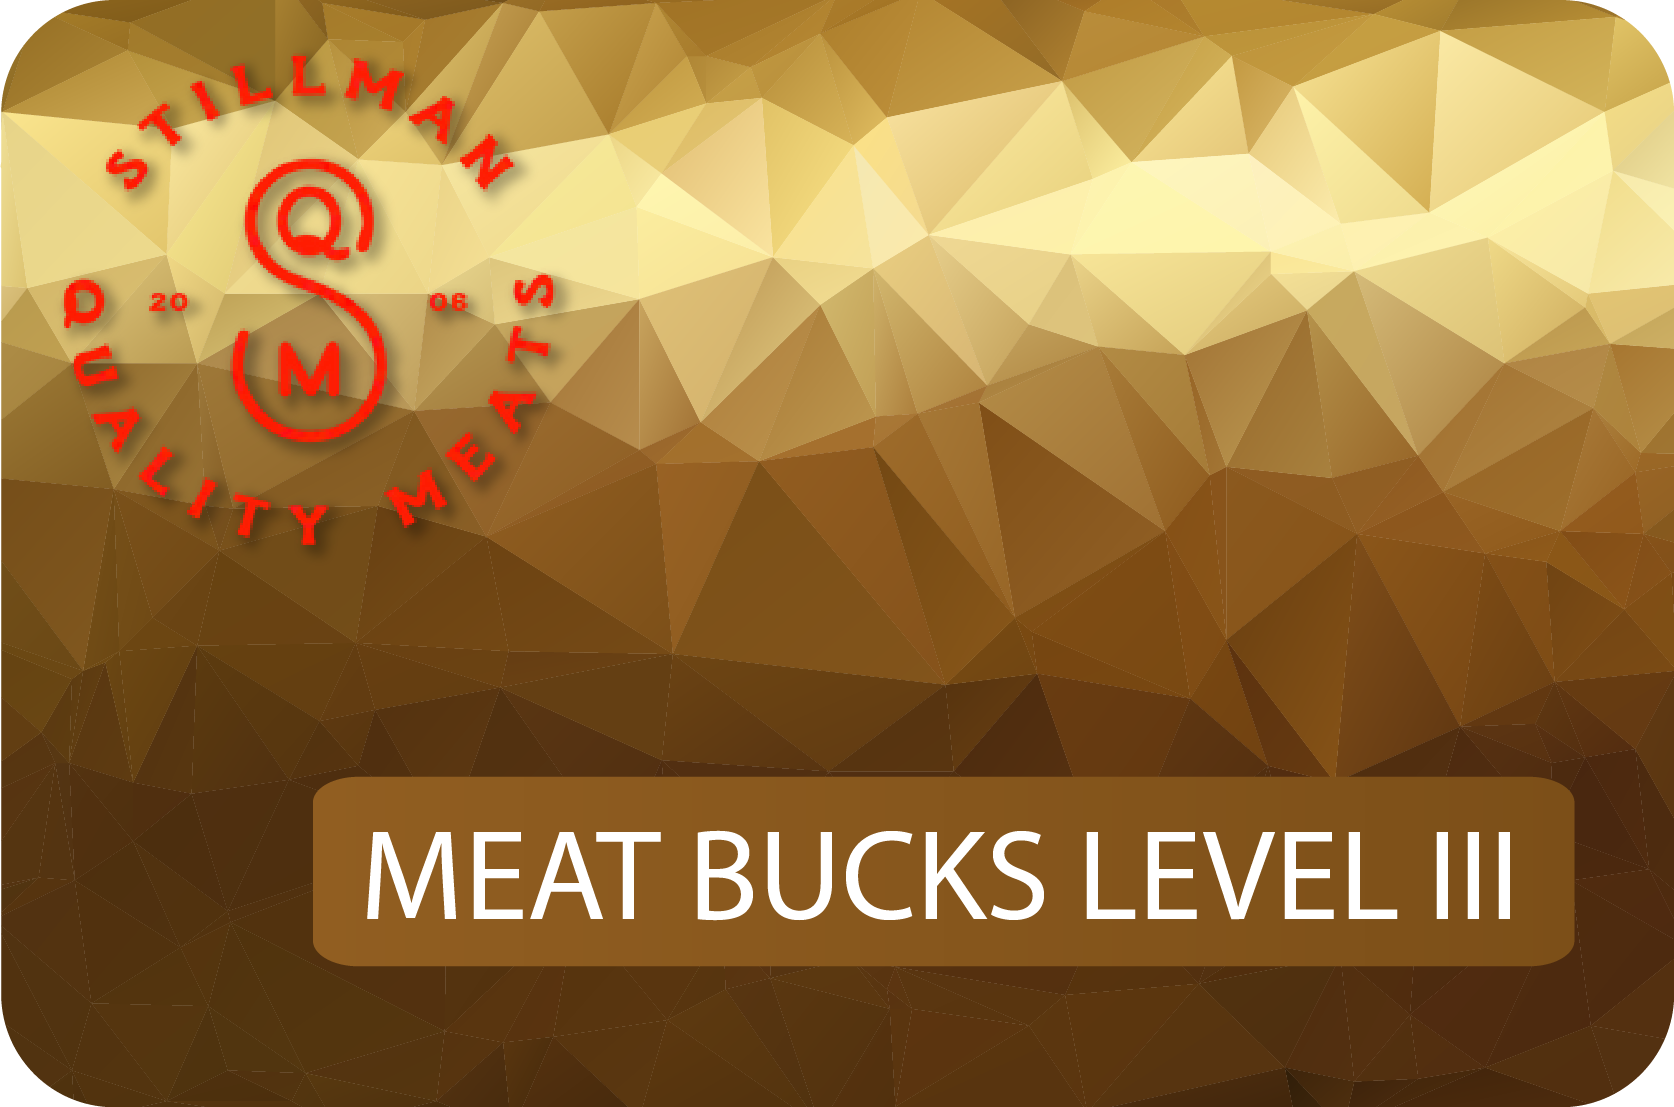 Meat Bucks Level III: $1000 → Get $1150 (15% savings!)